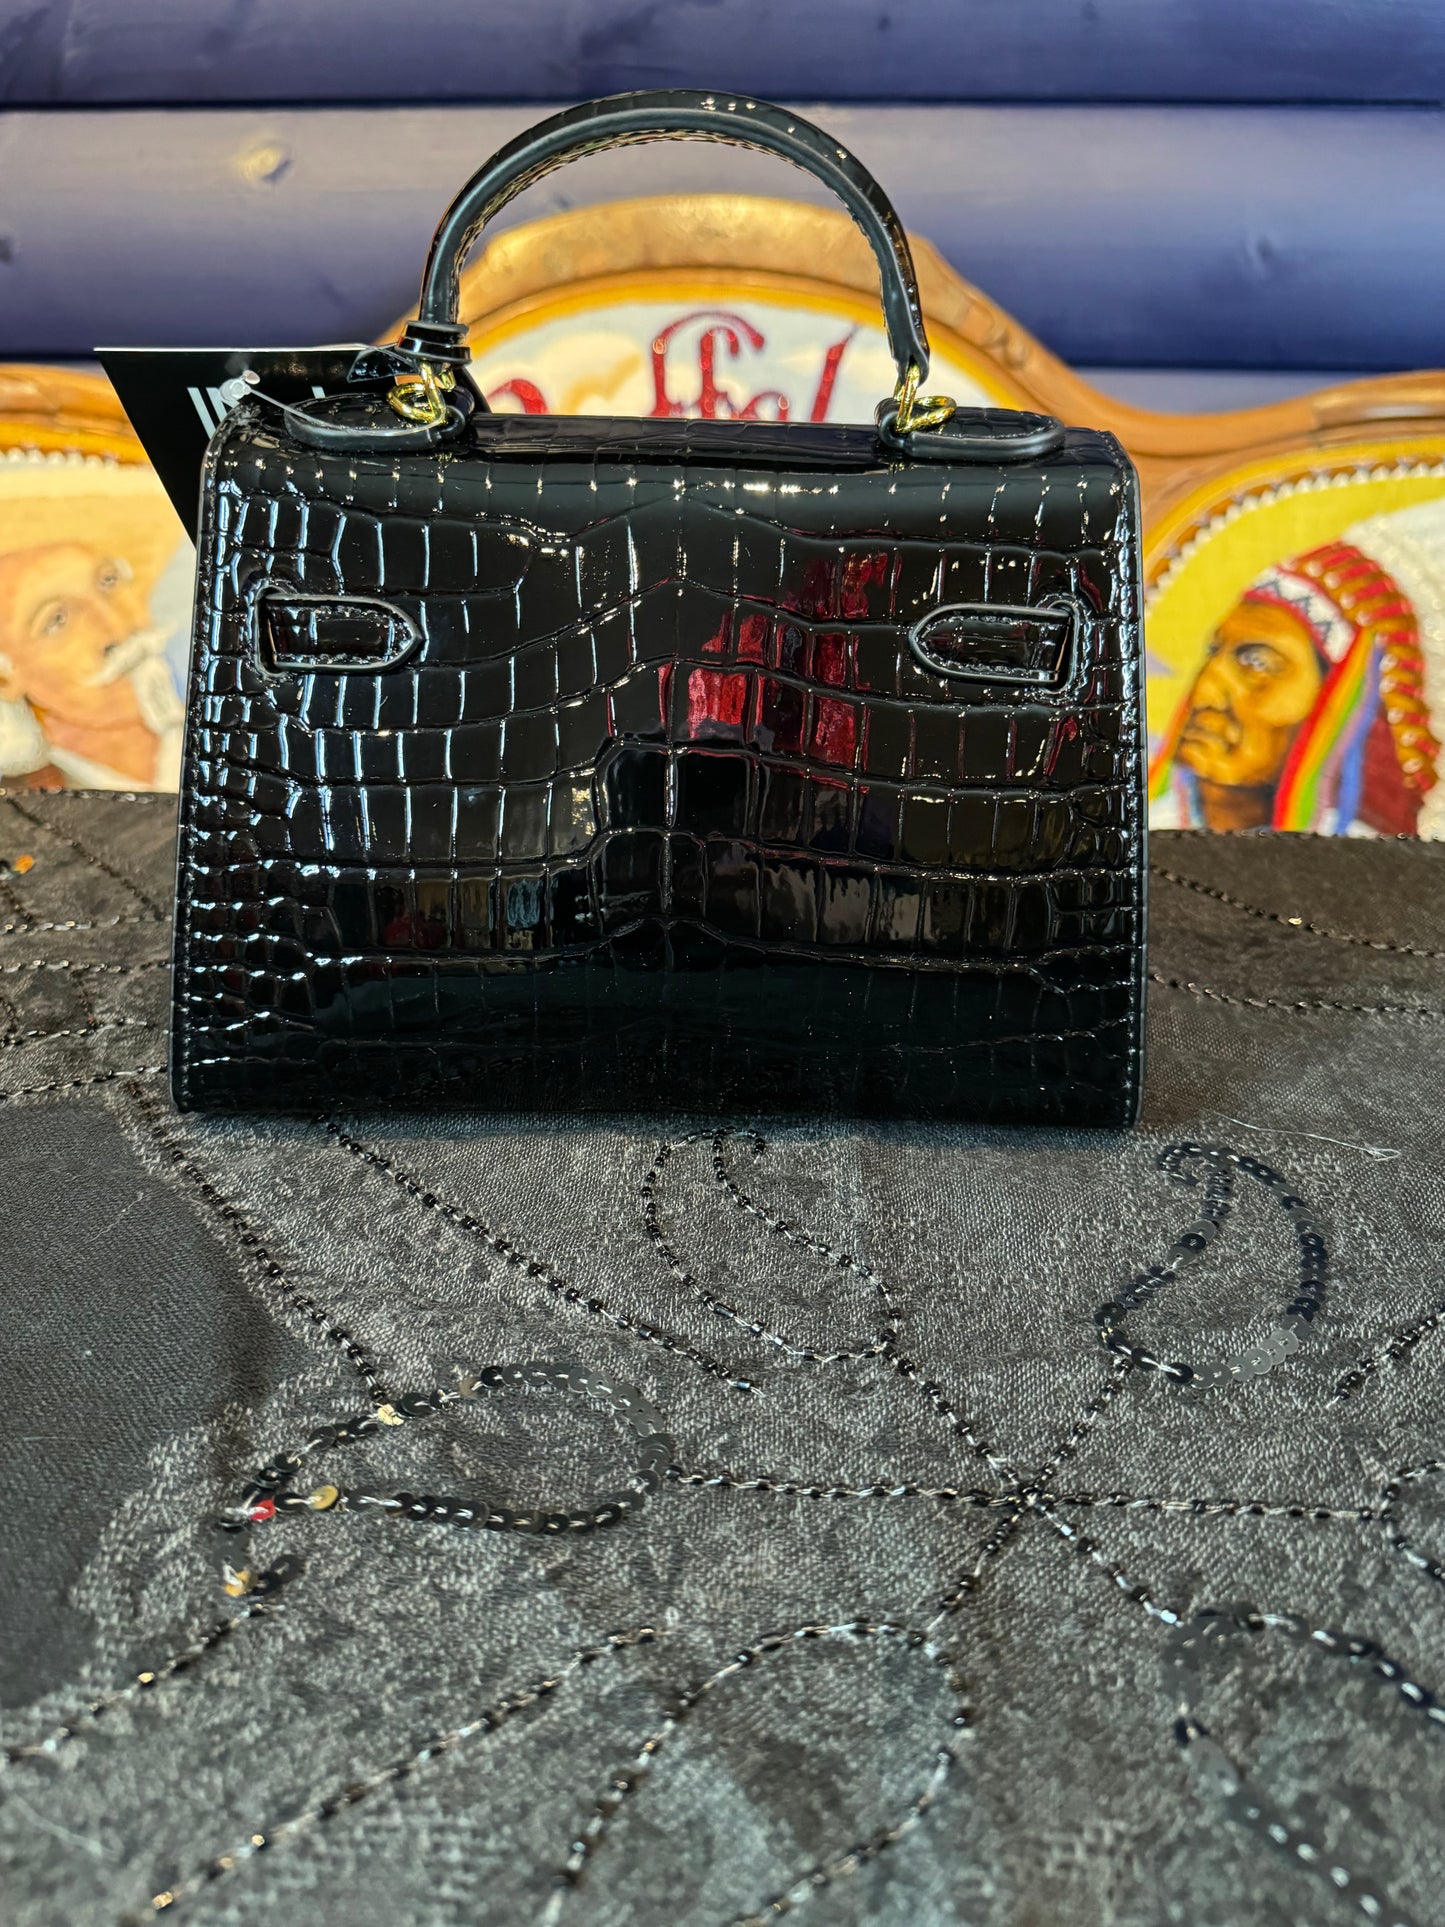 Black Patent Leather Handbag